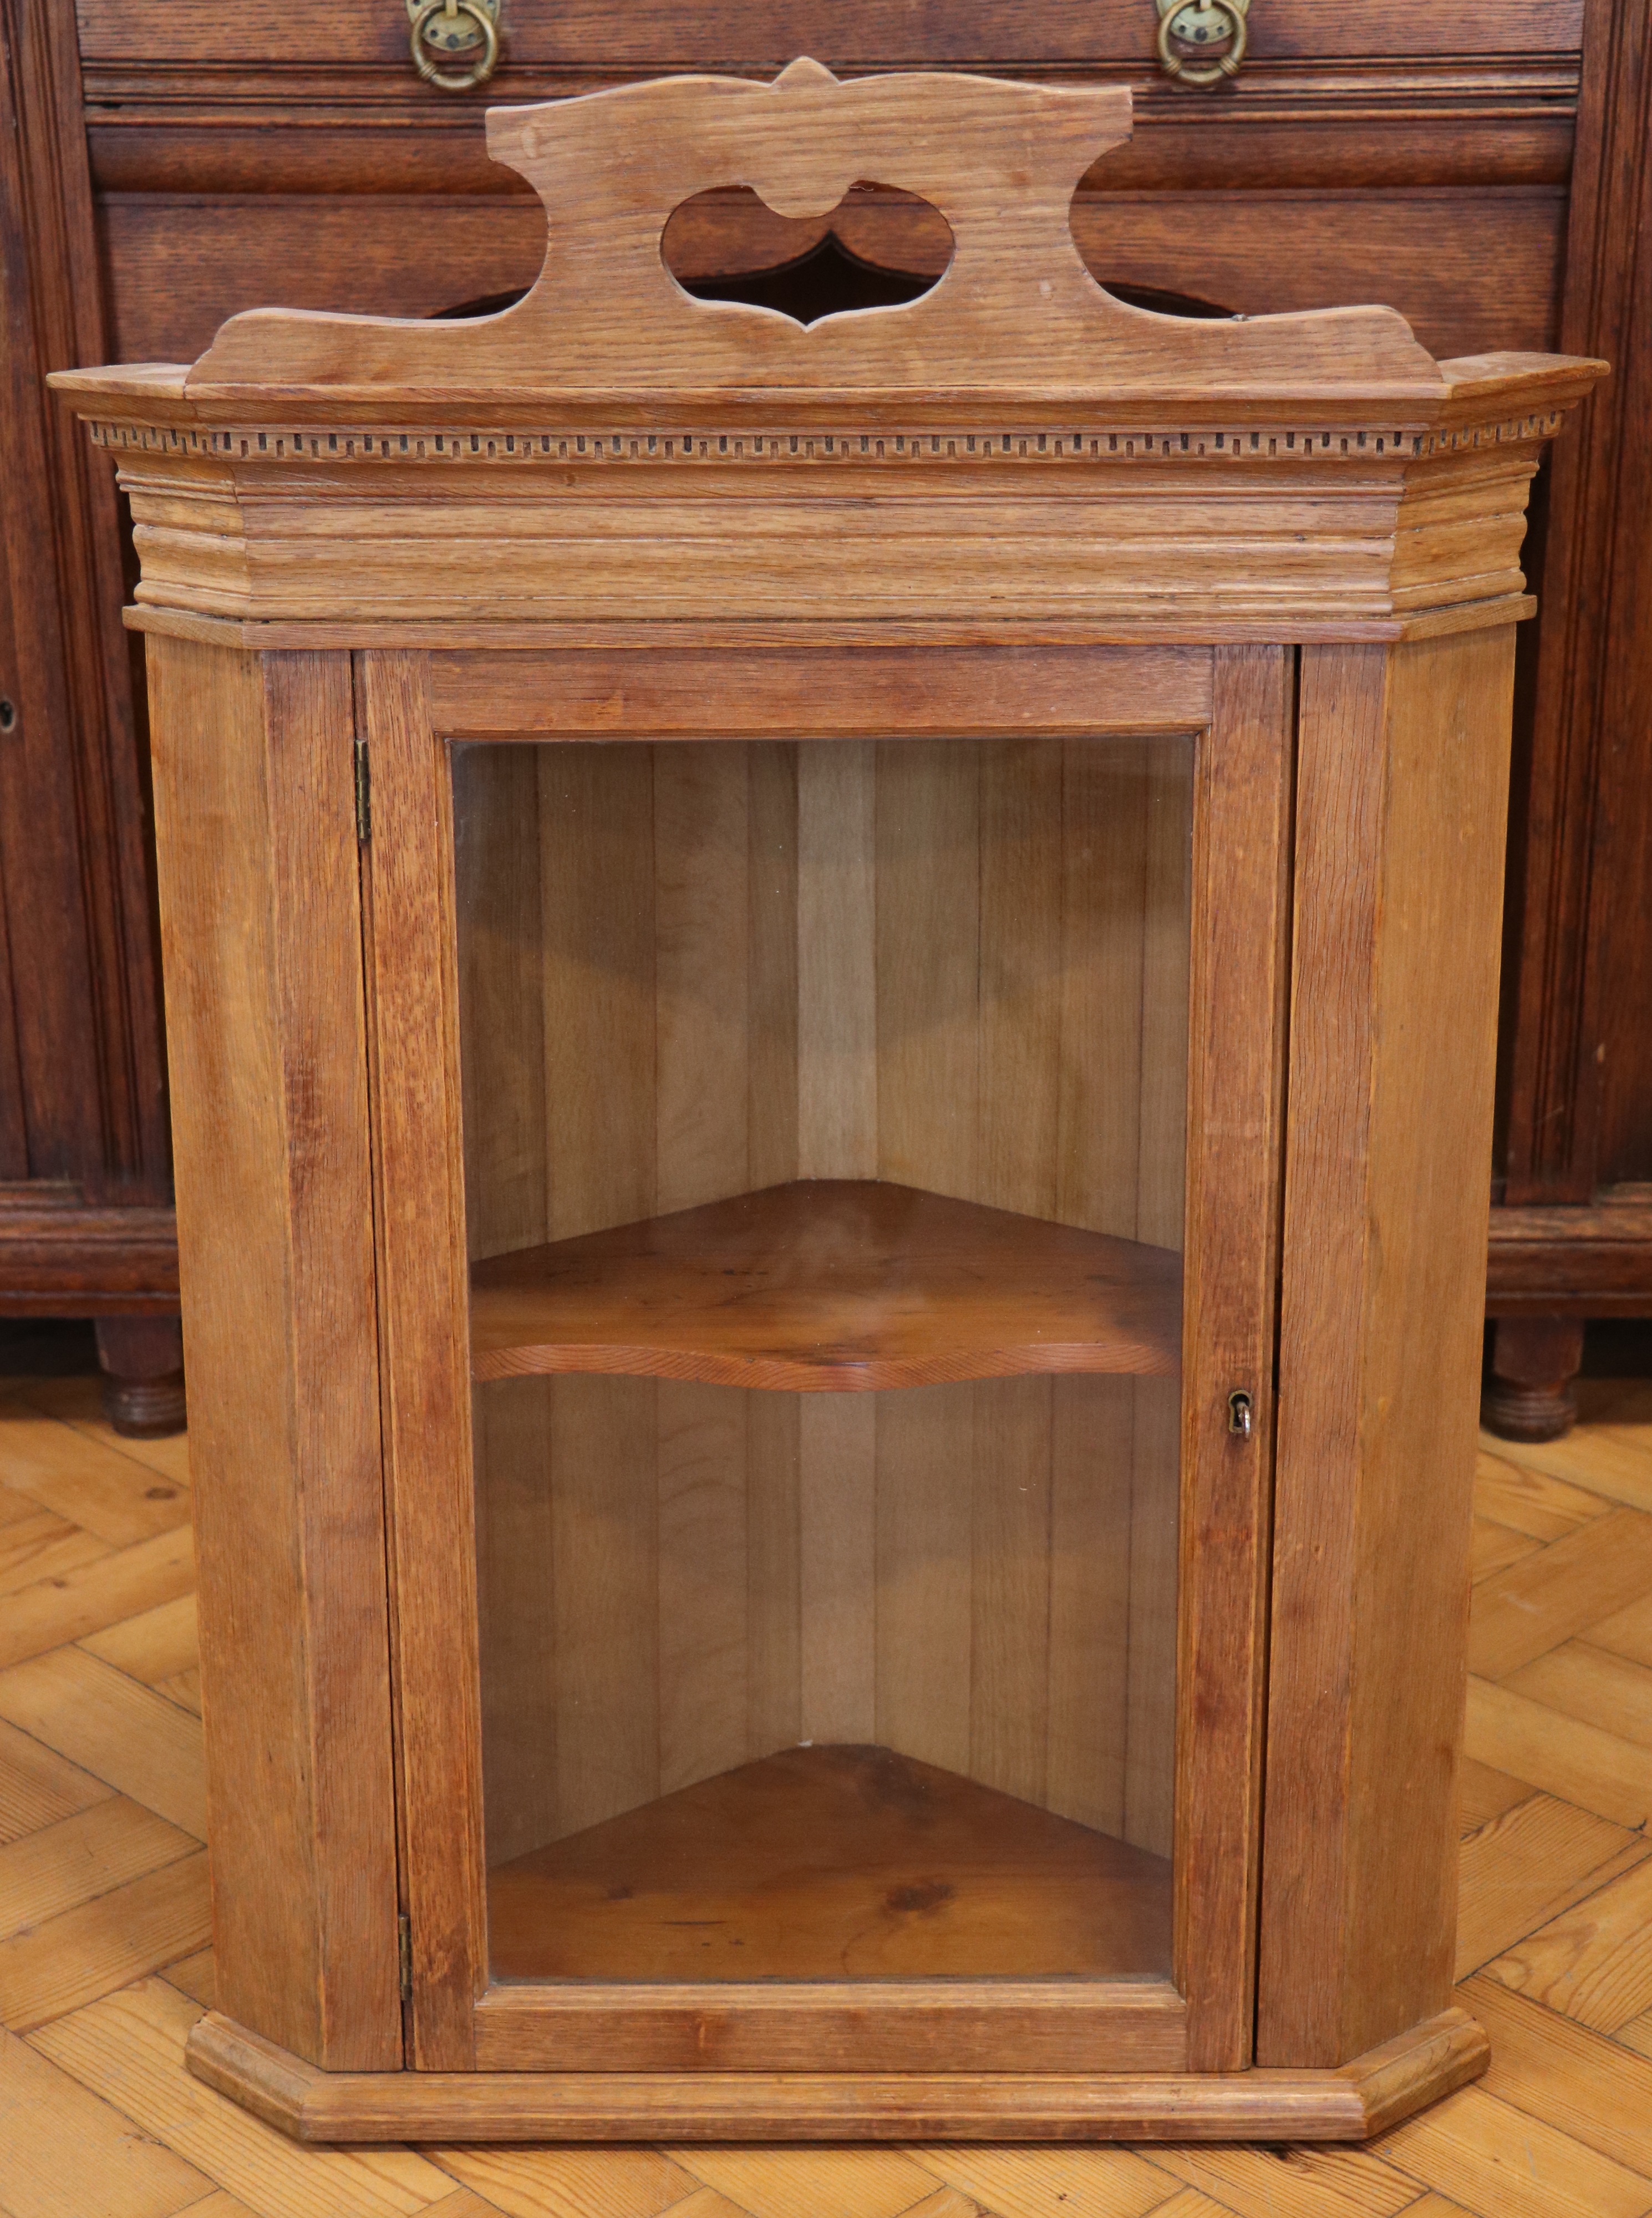 A Victorian glazed-oak corner cabinet, 60 cm x 85 cm